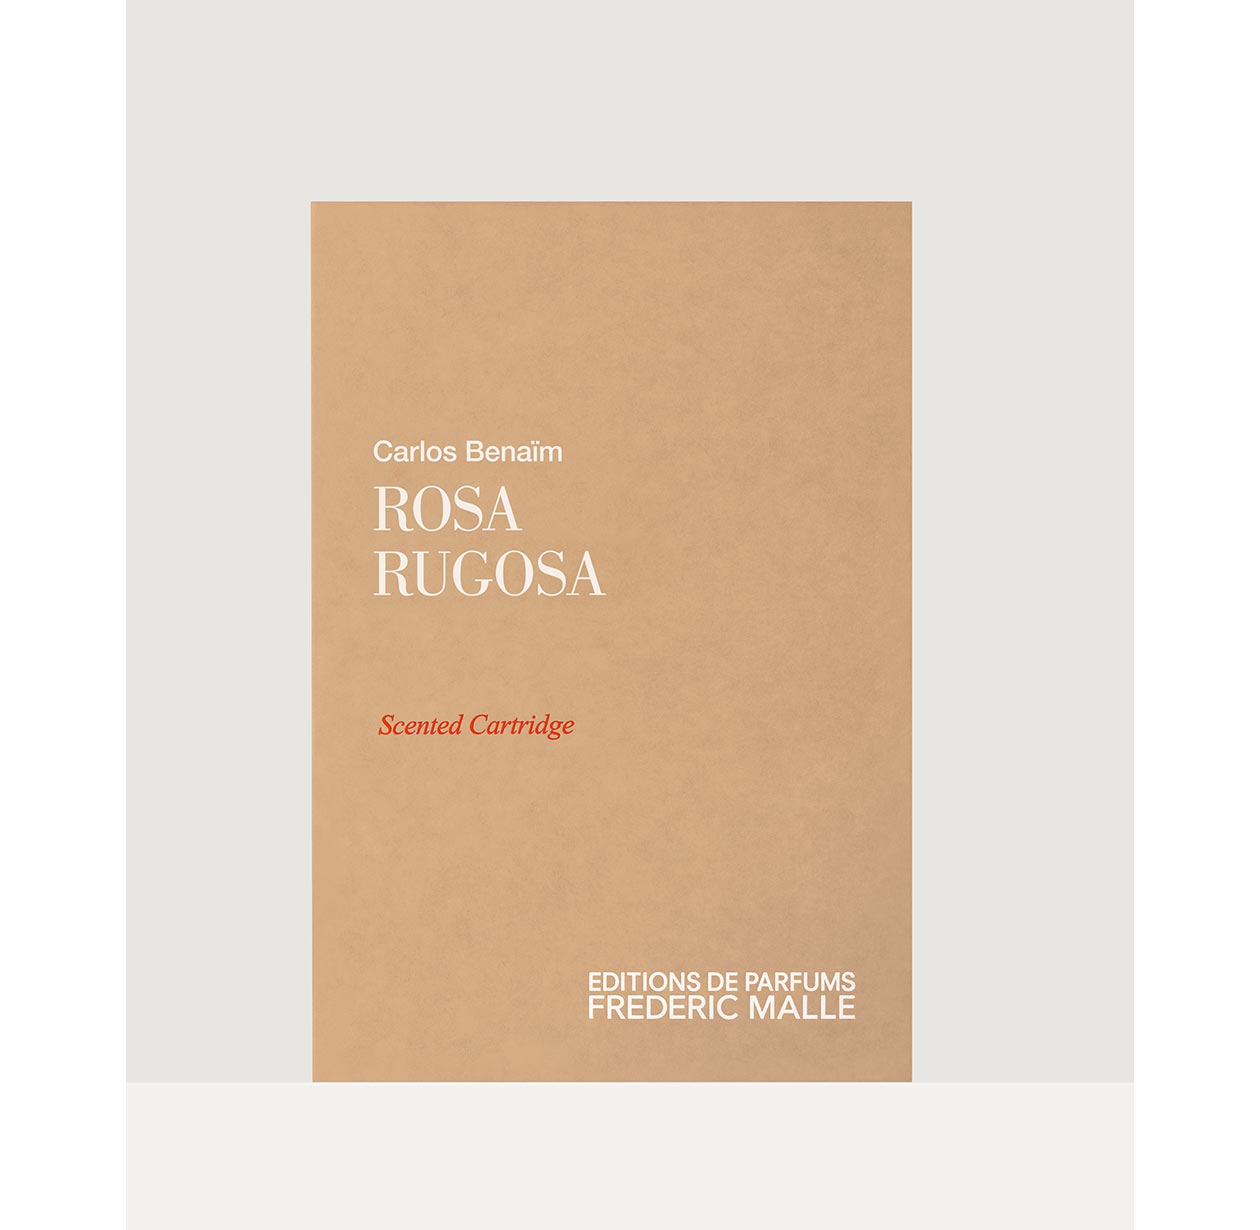 Rosa Rugosa Scented Cartridge